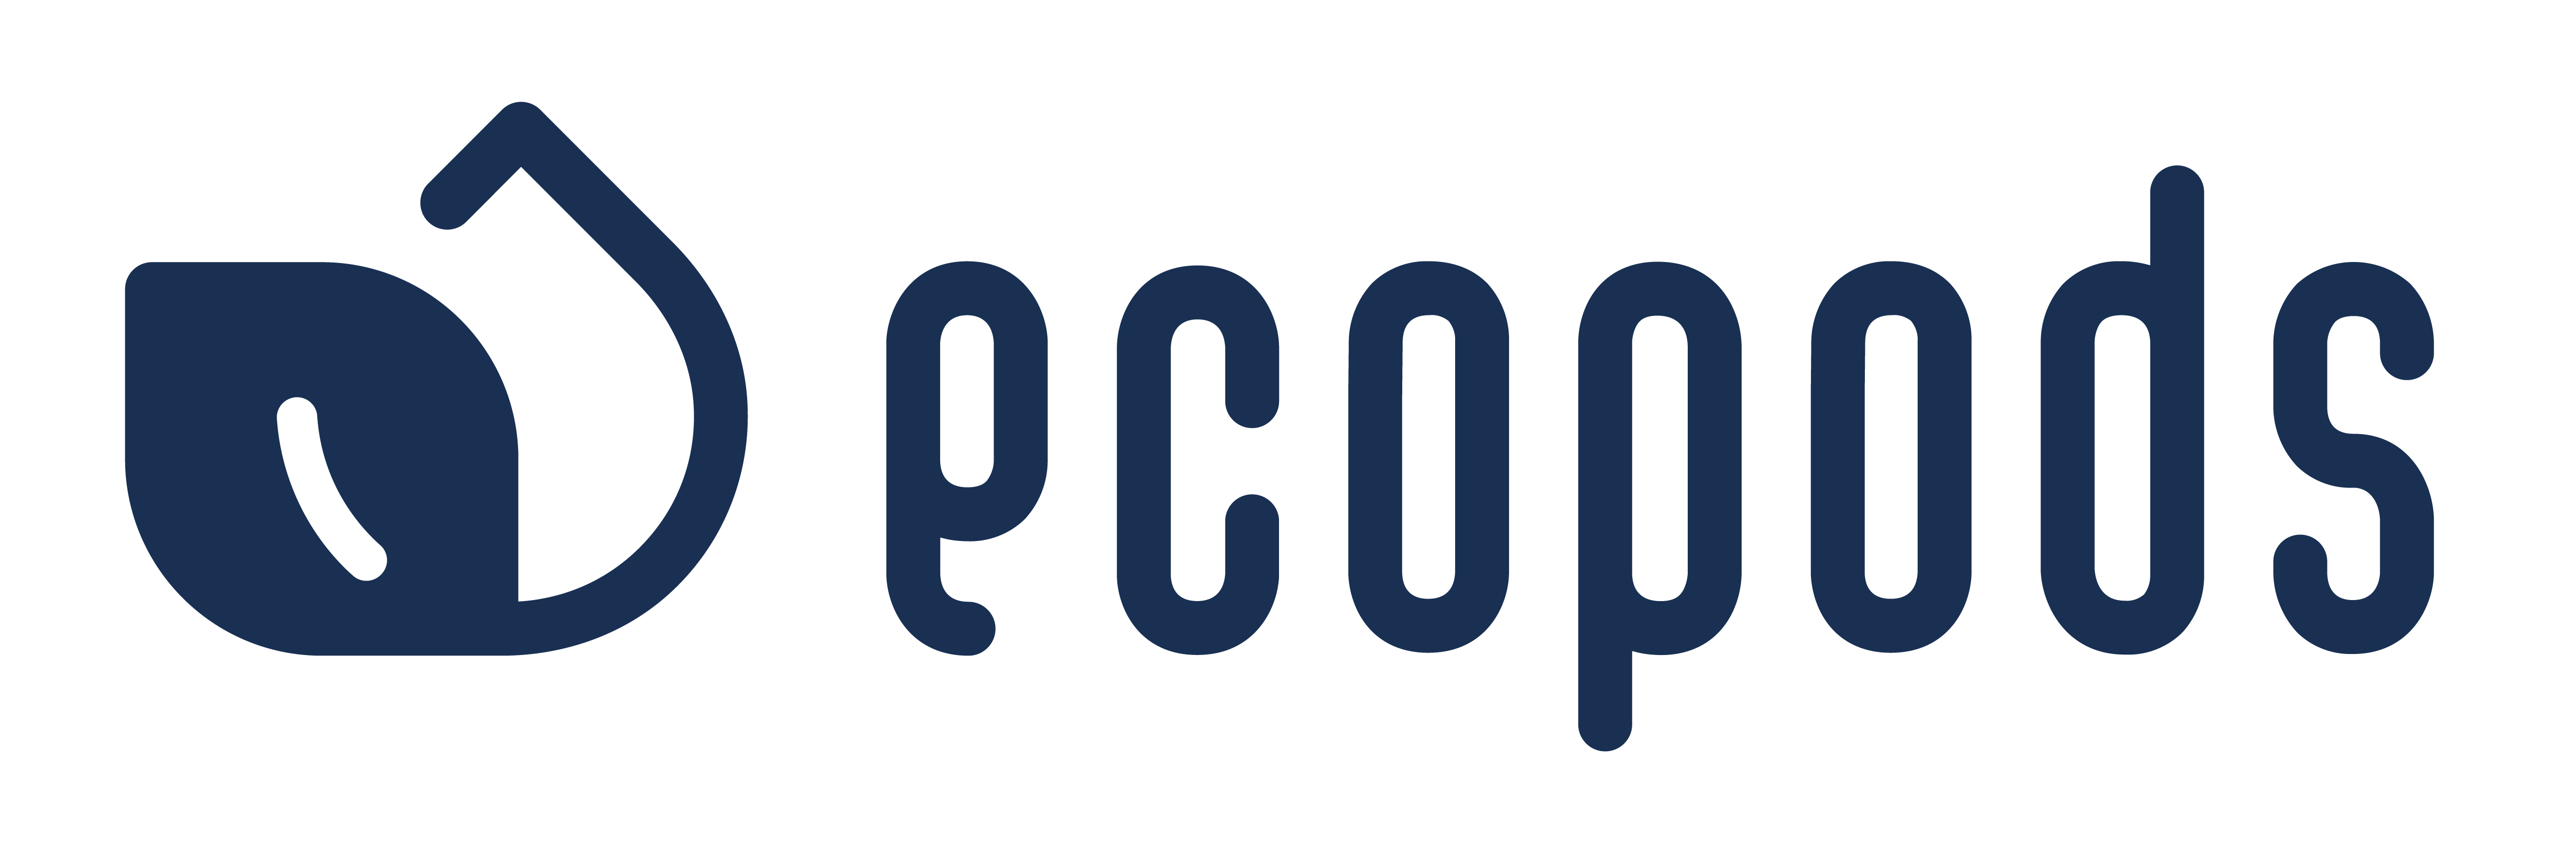 Ecopods logo